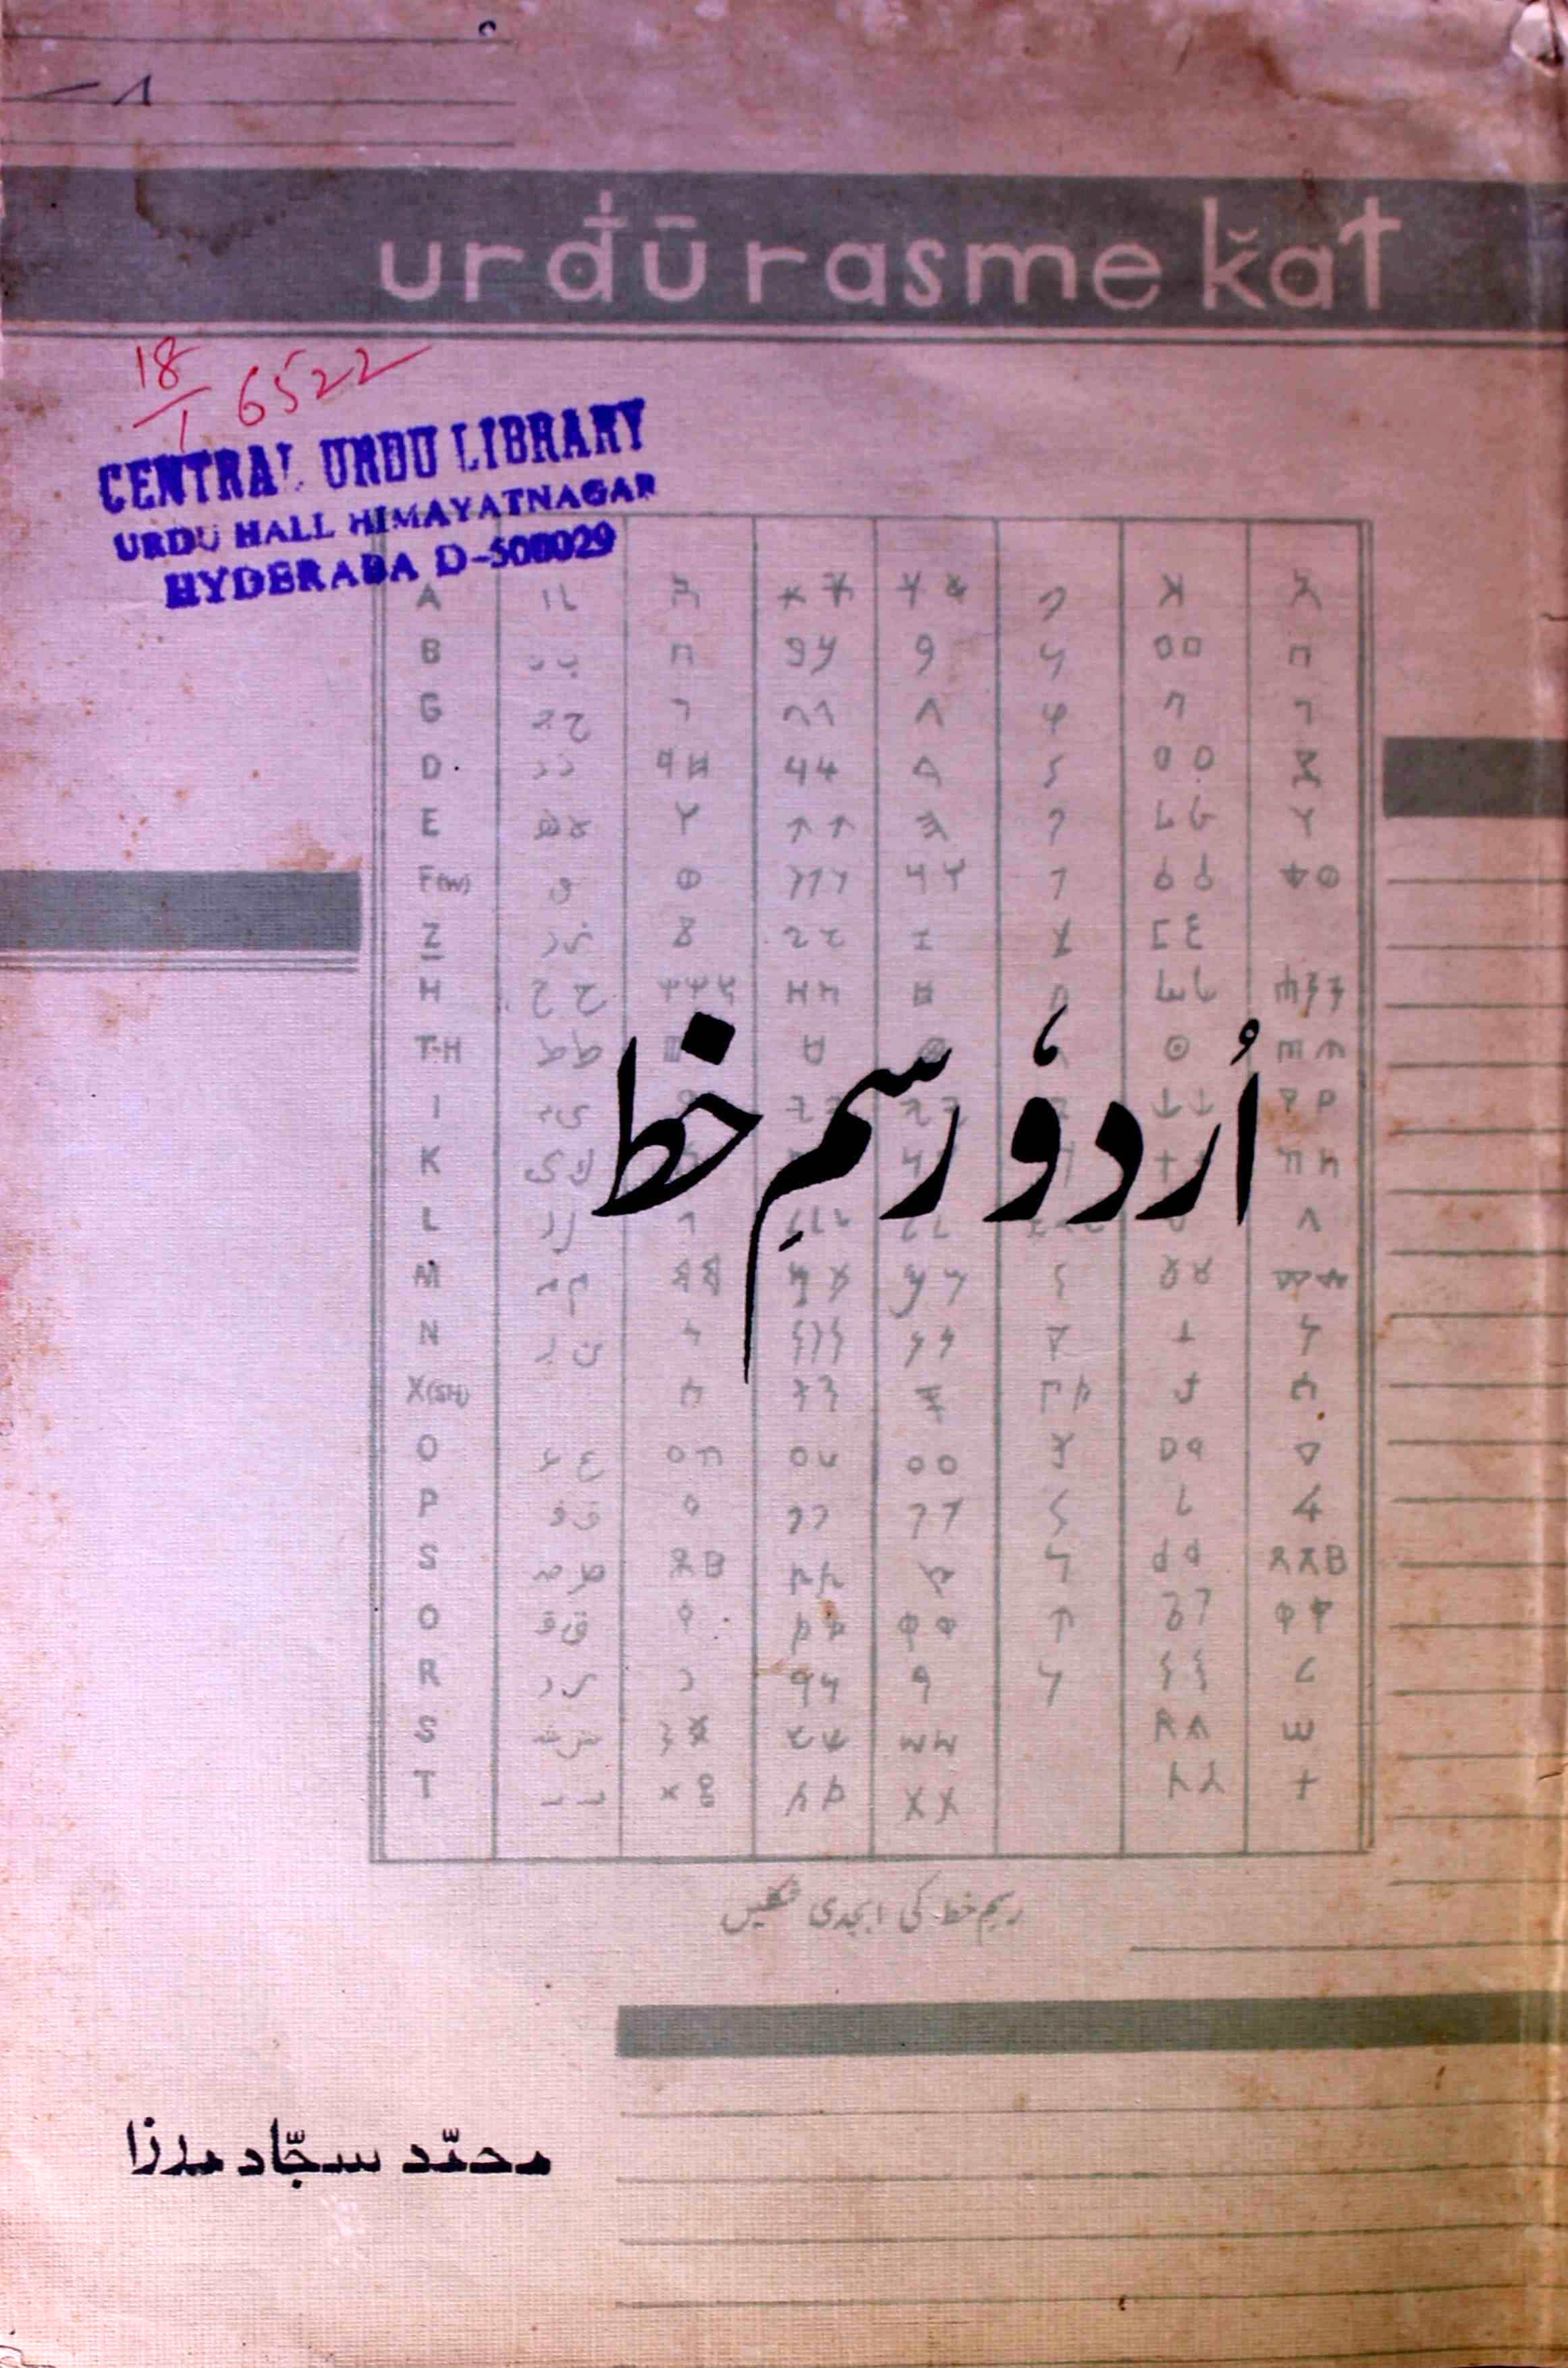 Urdu Rasm-e-Khat